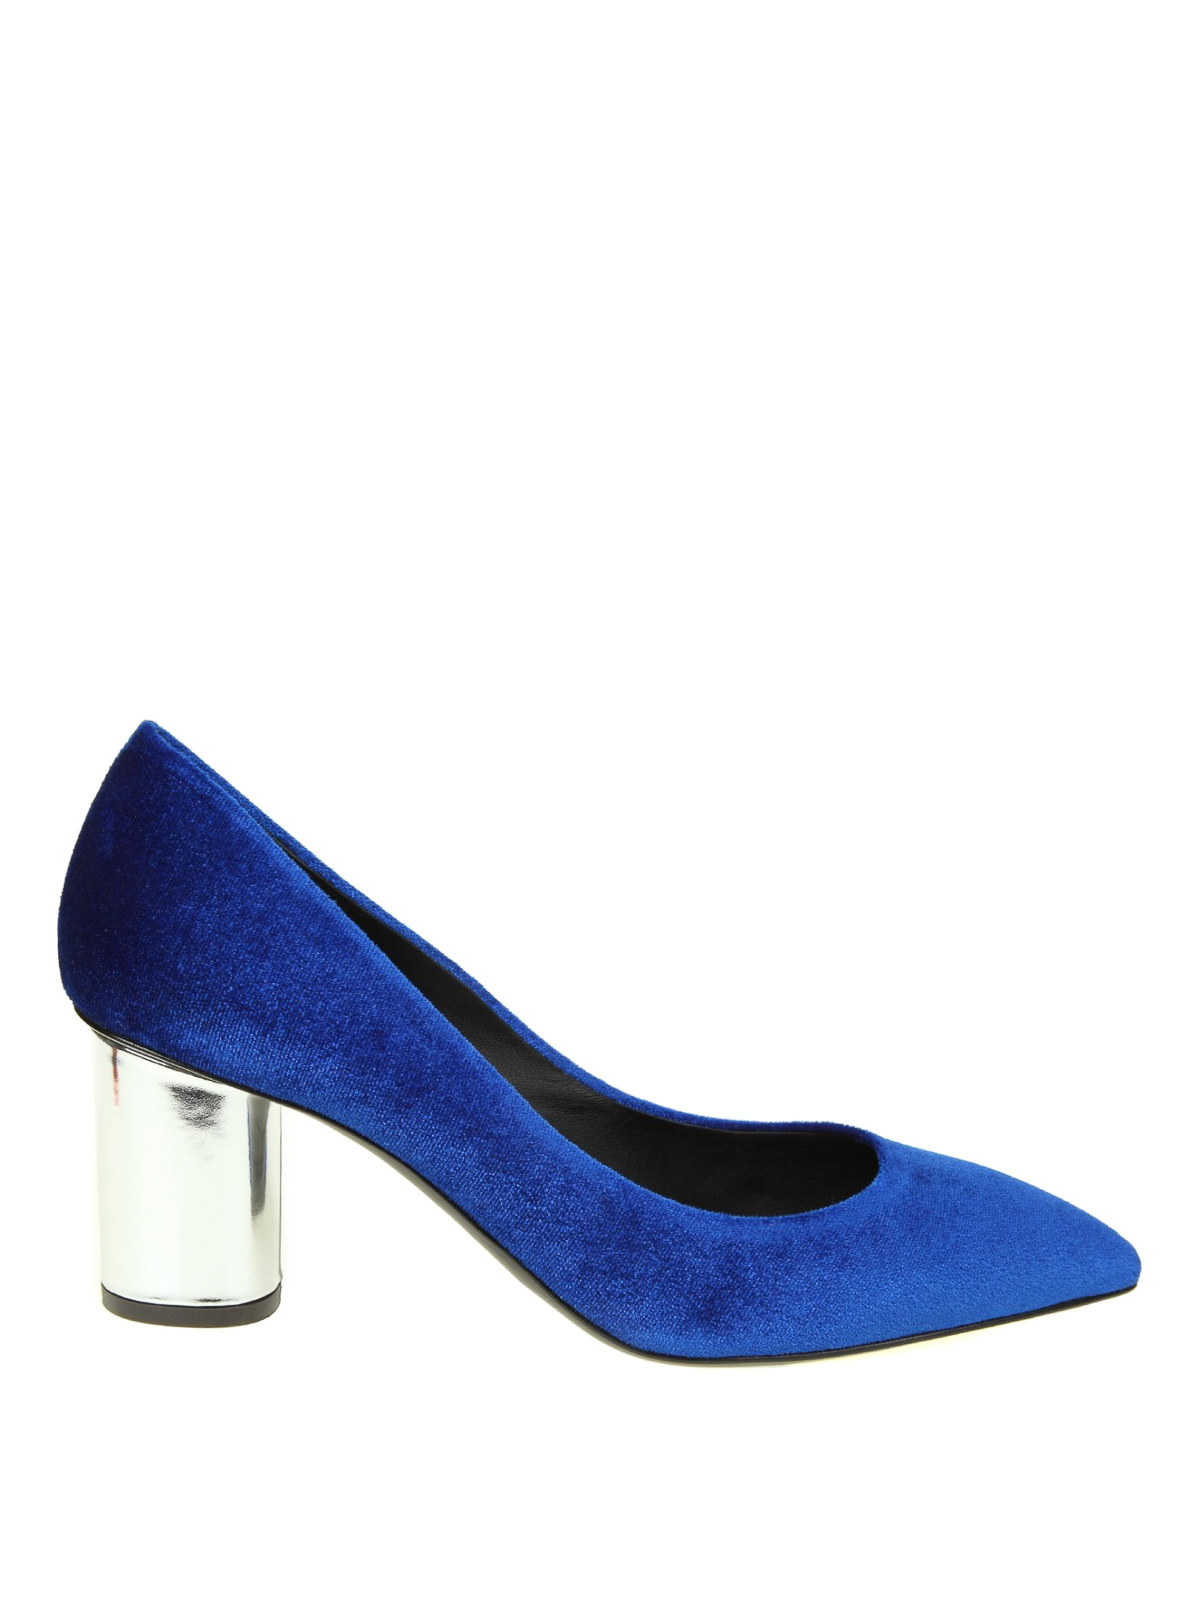 shoes Zanotti Crudelia blue velvet pumps - I860023001